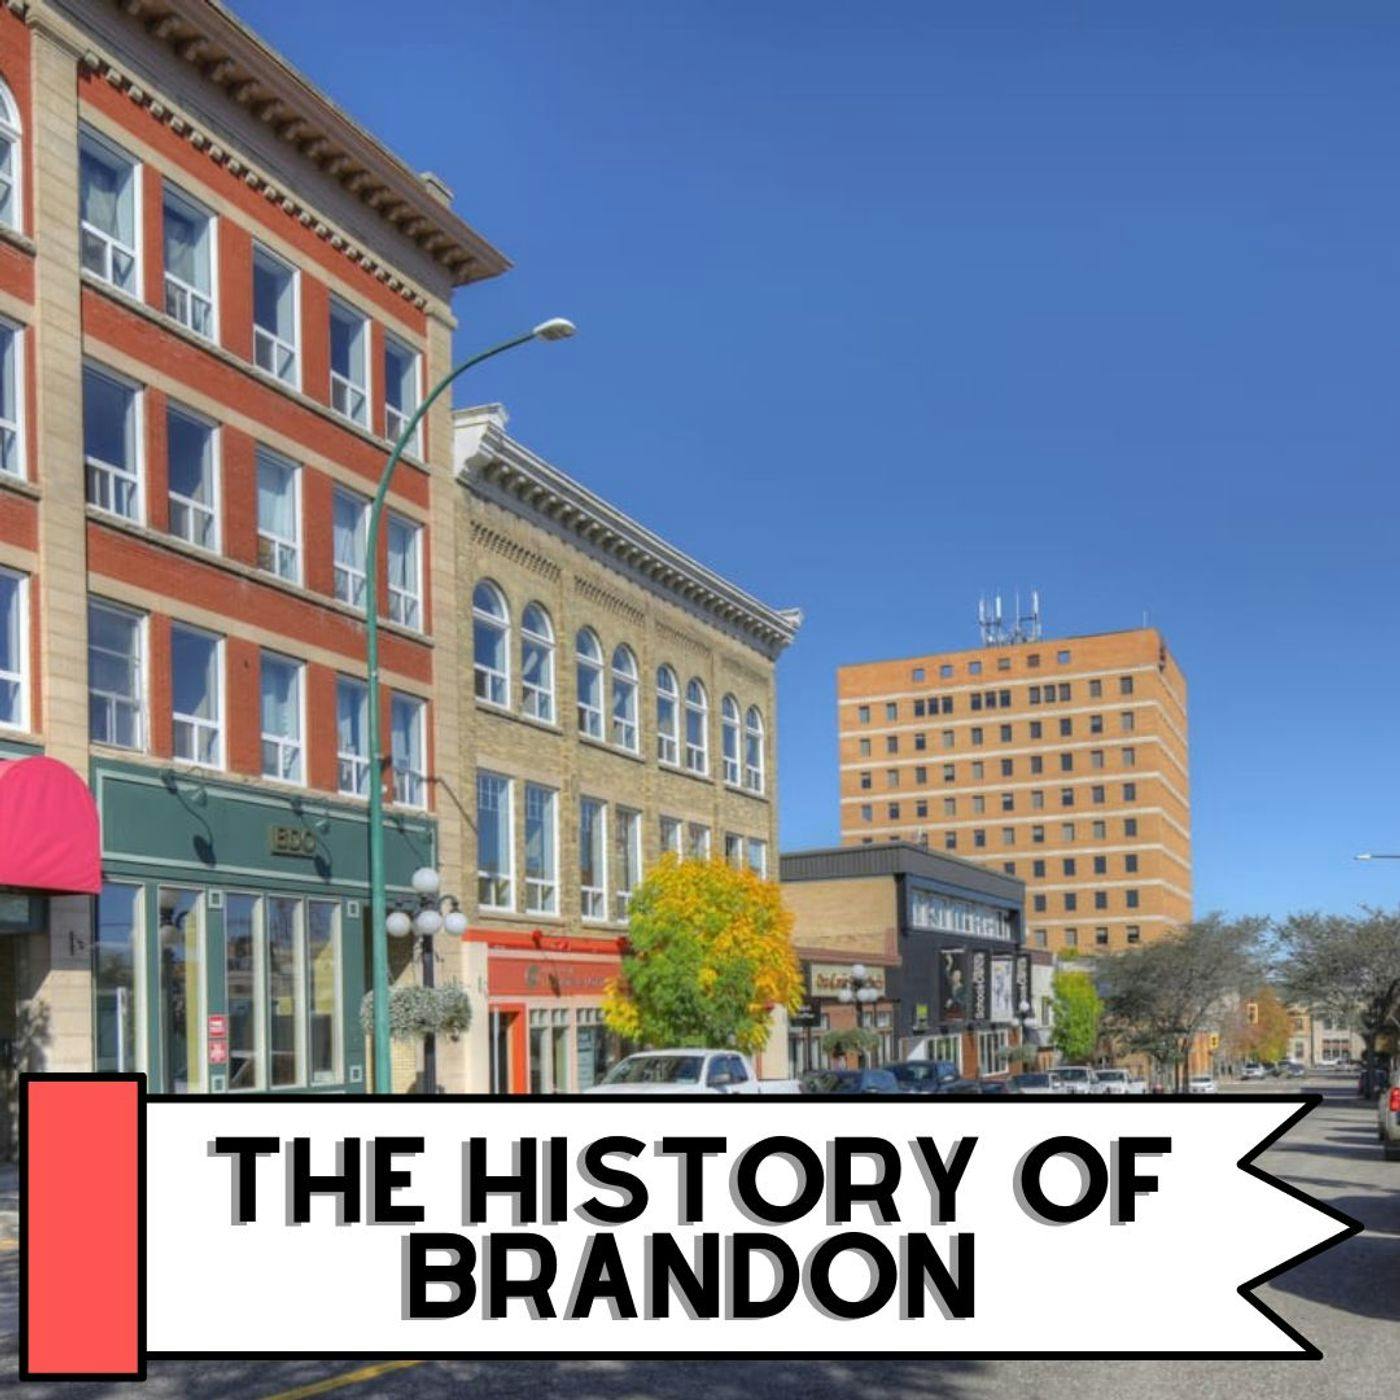 The History of Brandon